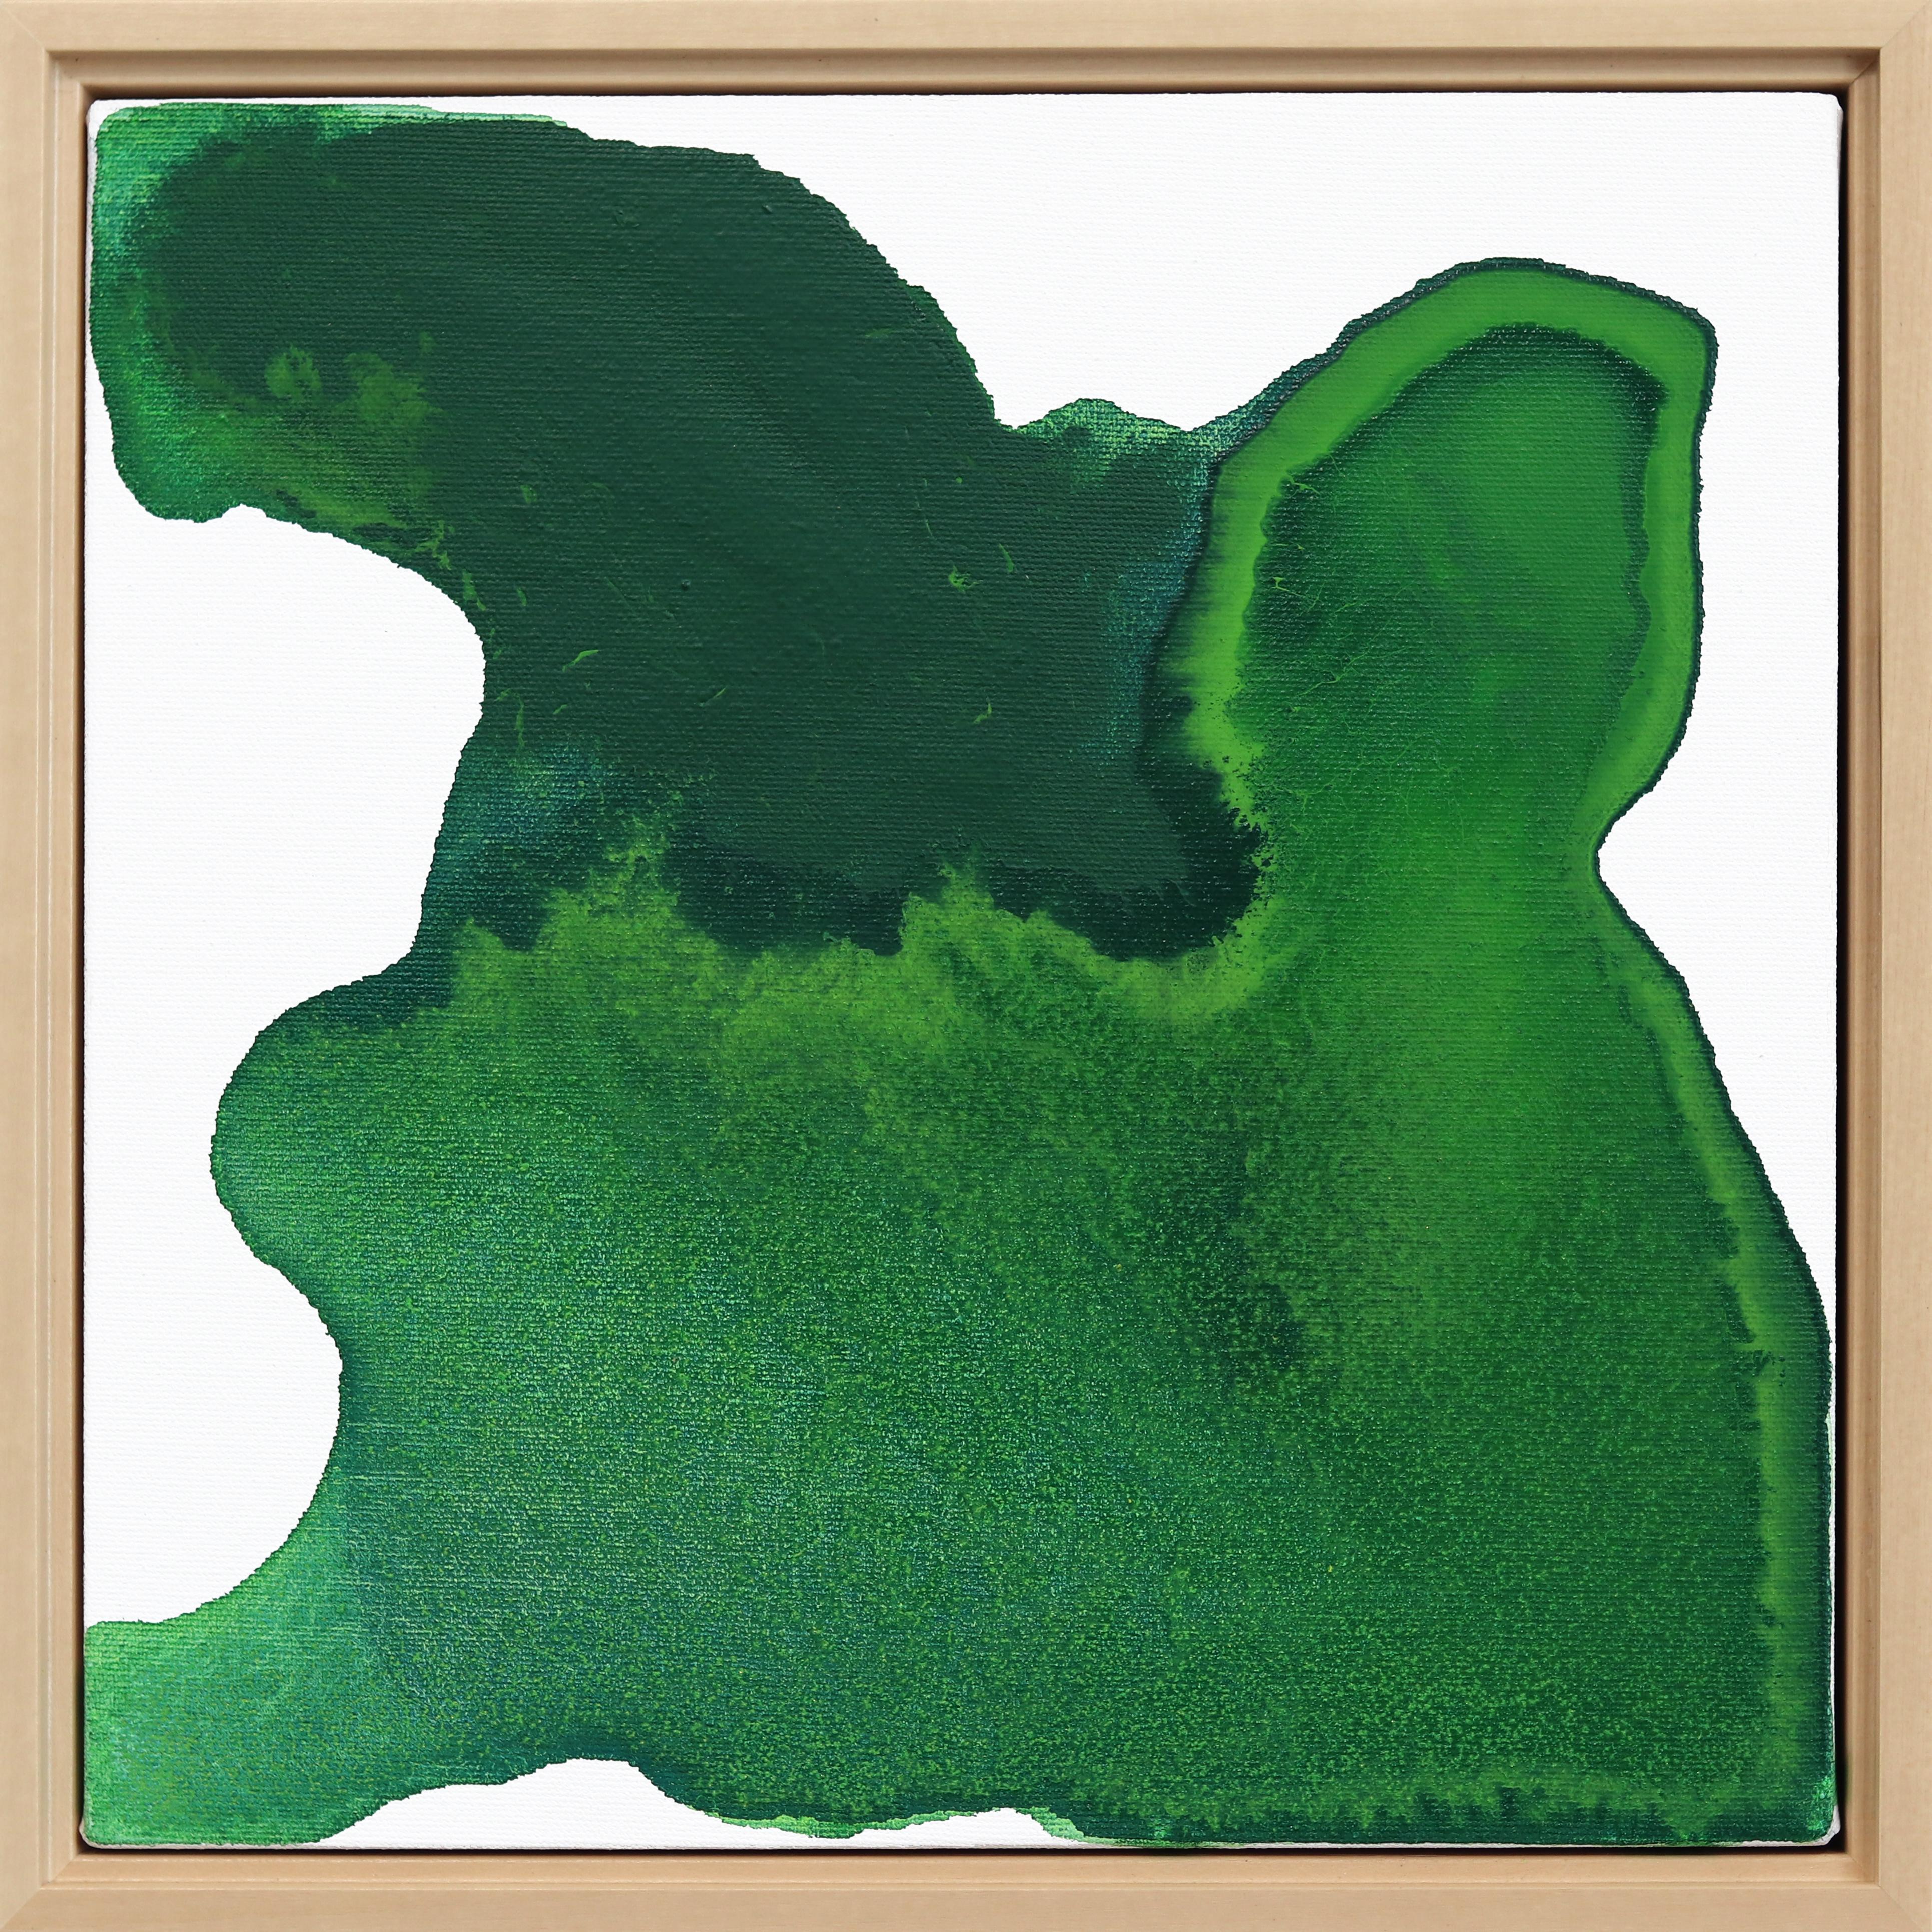 Happy Times - Framed Original Green Minimalist Abstract Contemporary Art - Mixed Media Art by Clara Berta